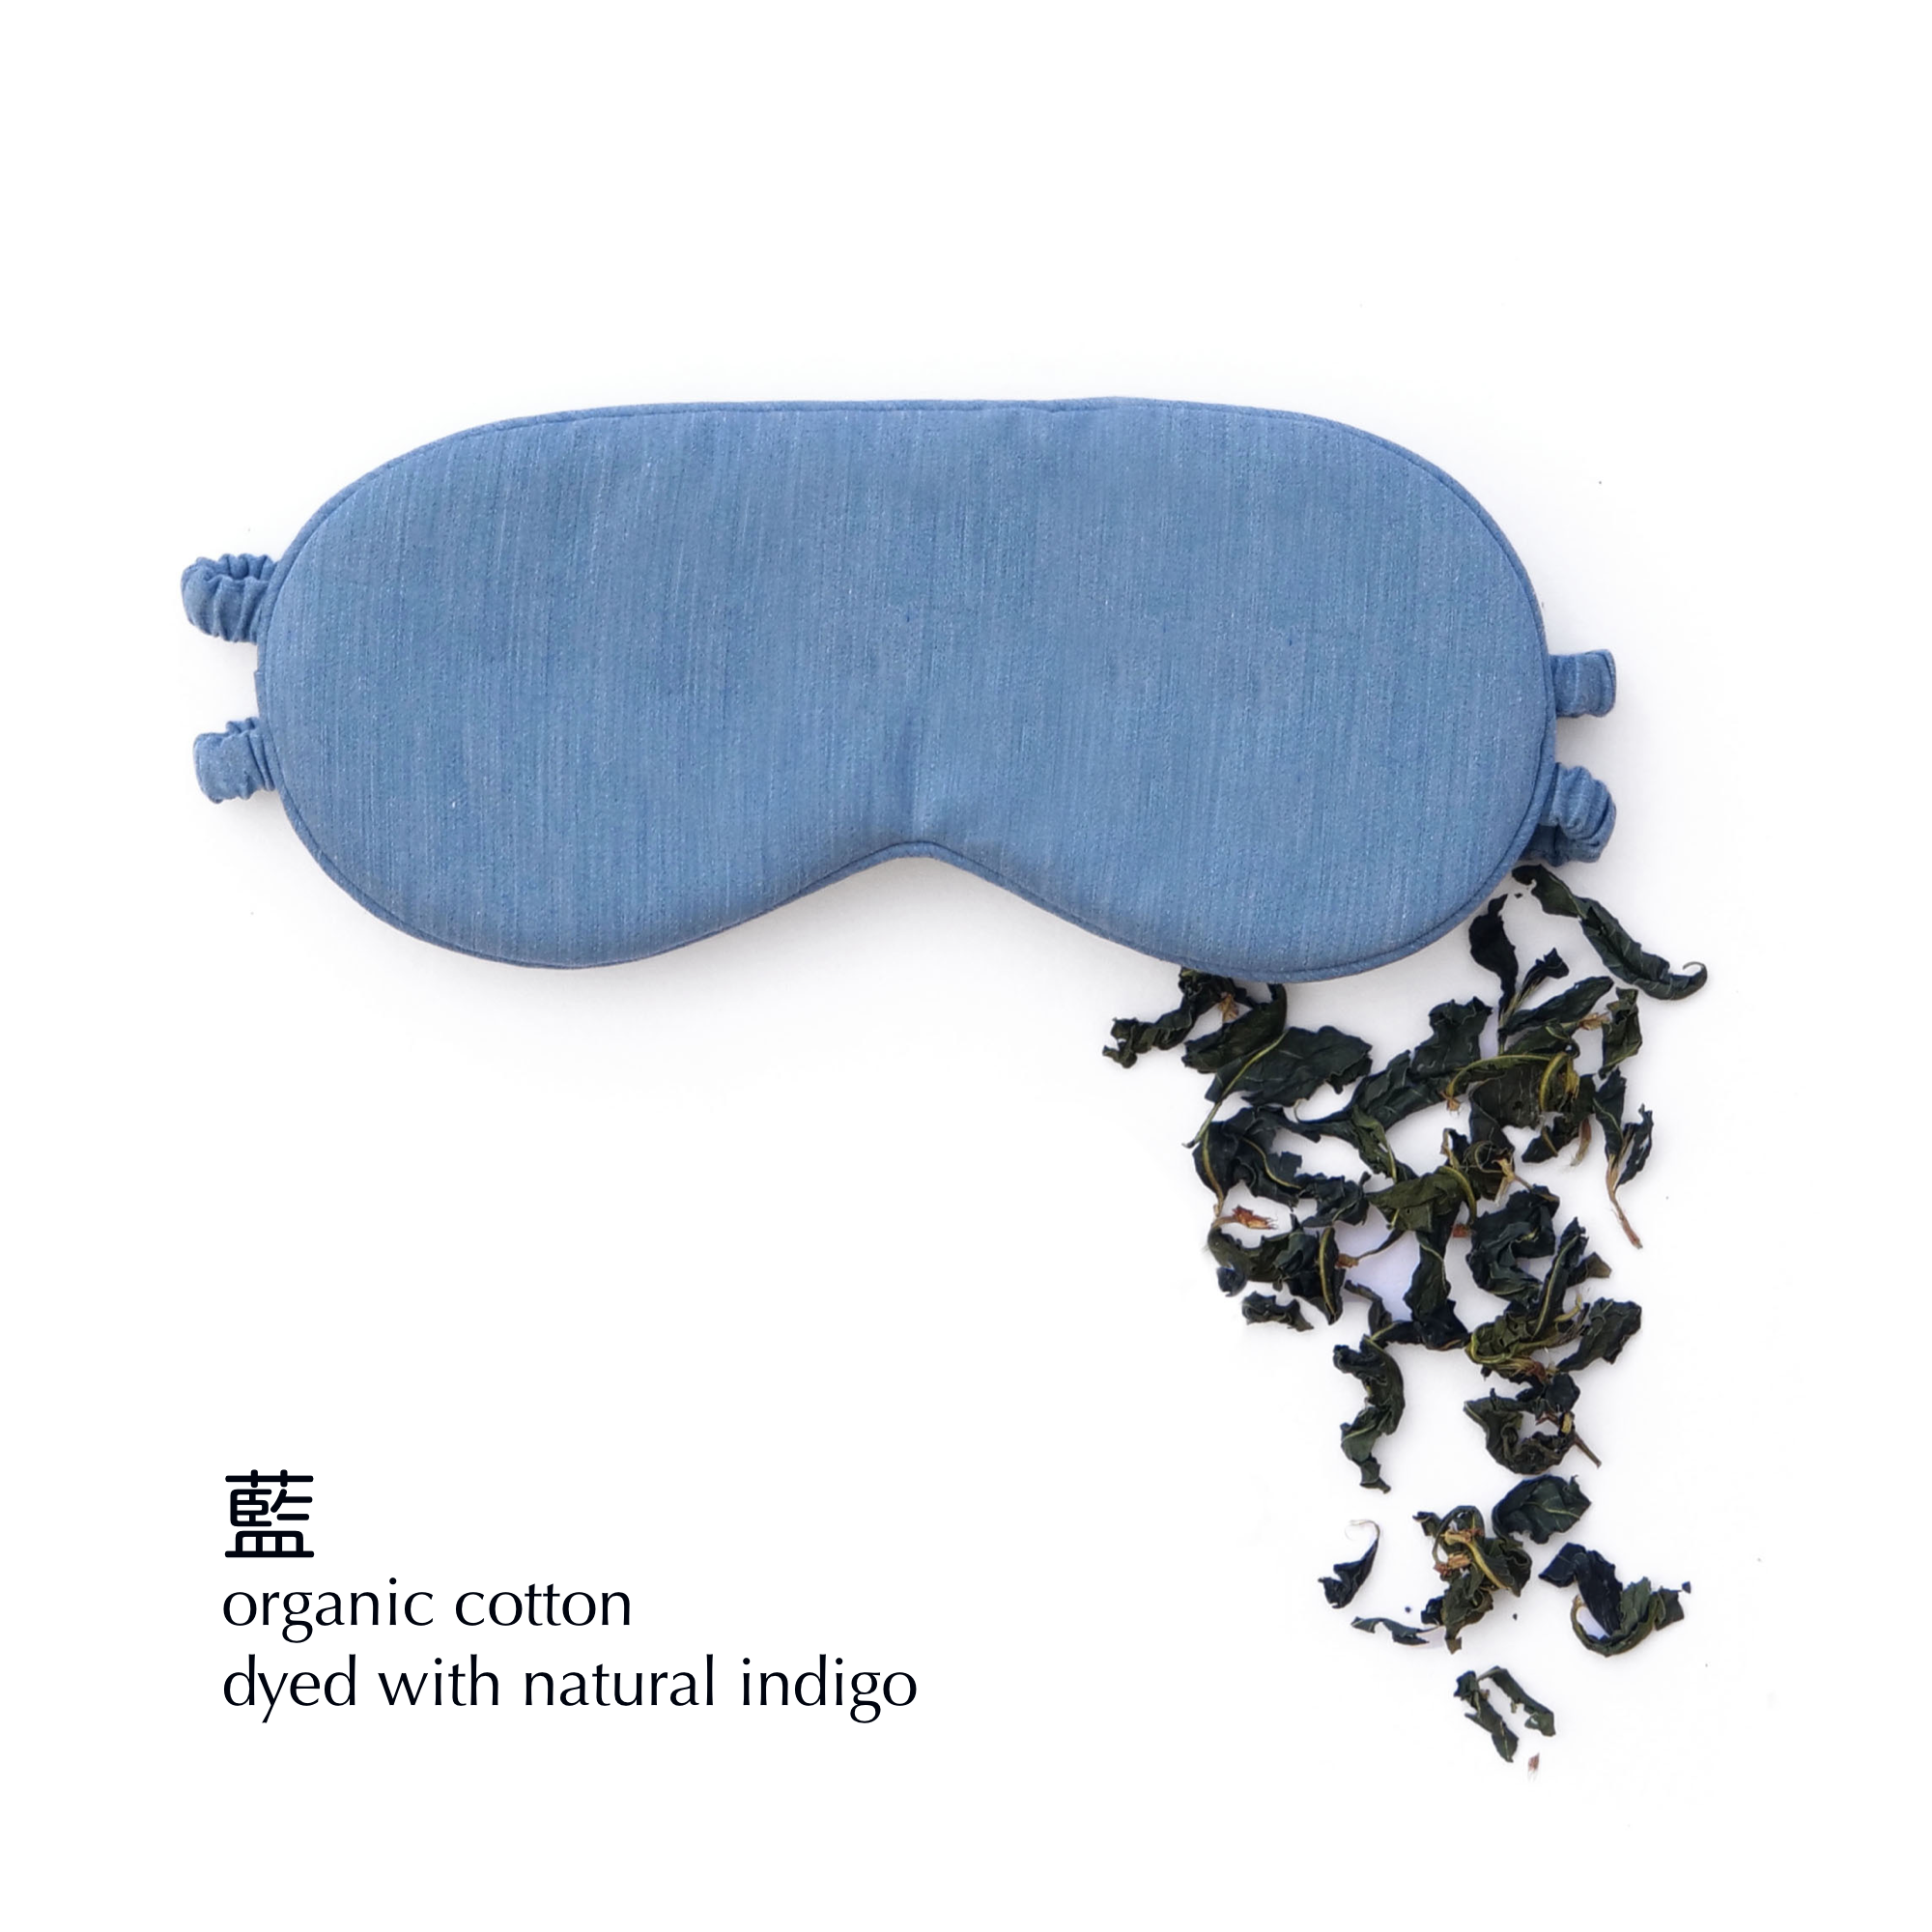 Sleep Zen Sateen Schlafmaske